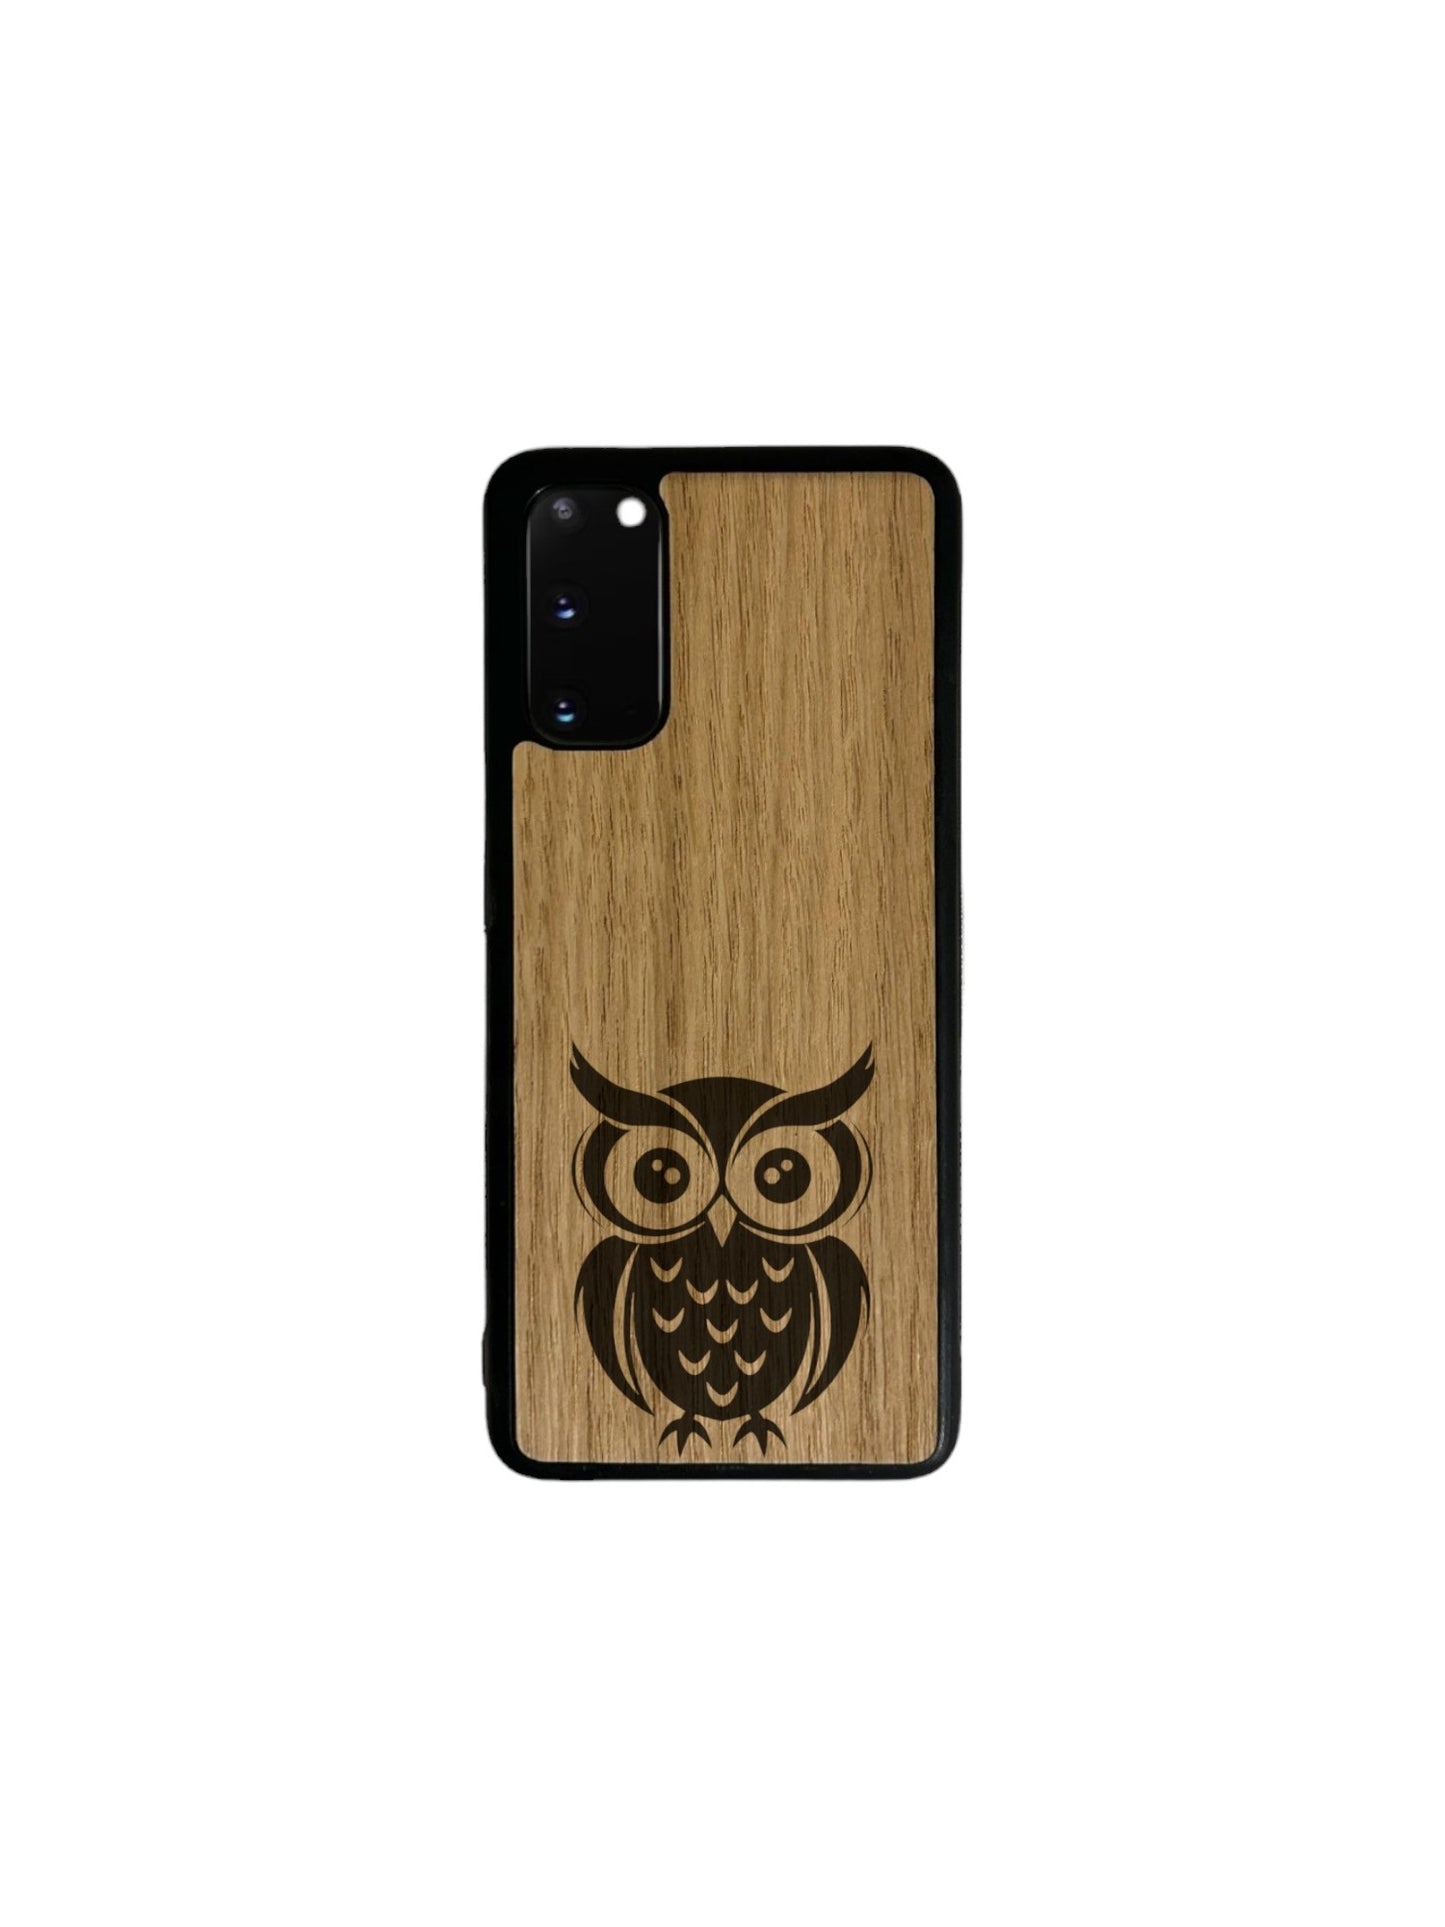 Samsung Galaxy S case - The owl